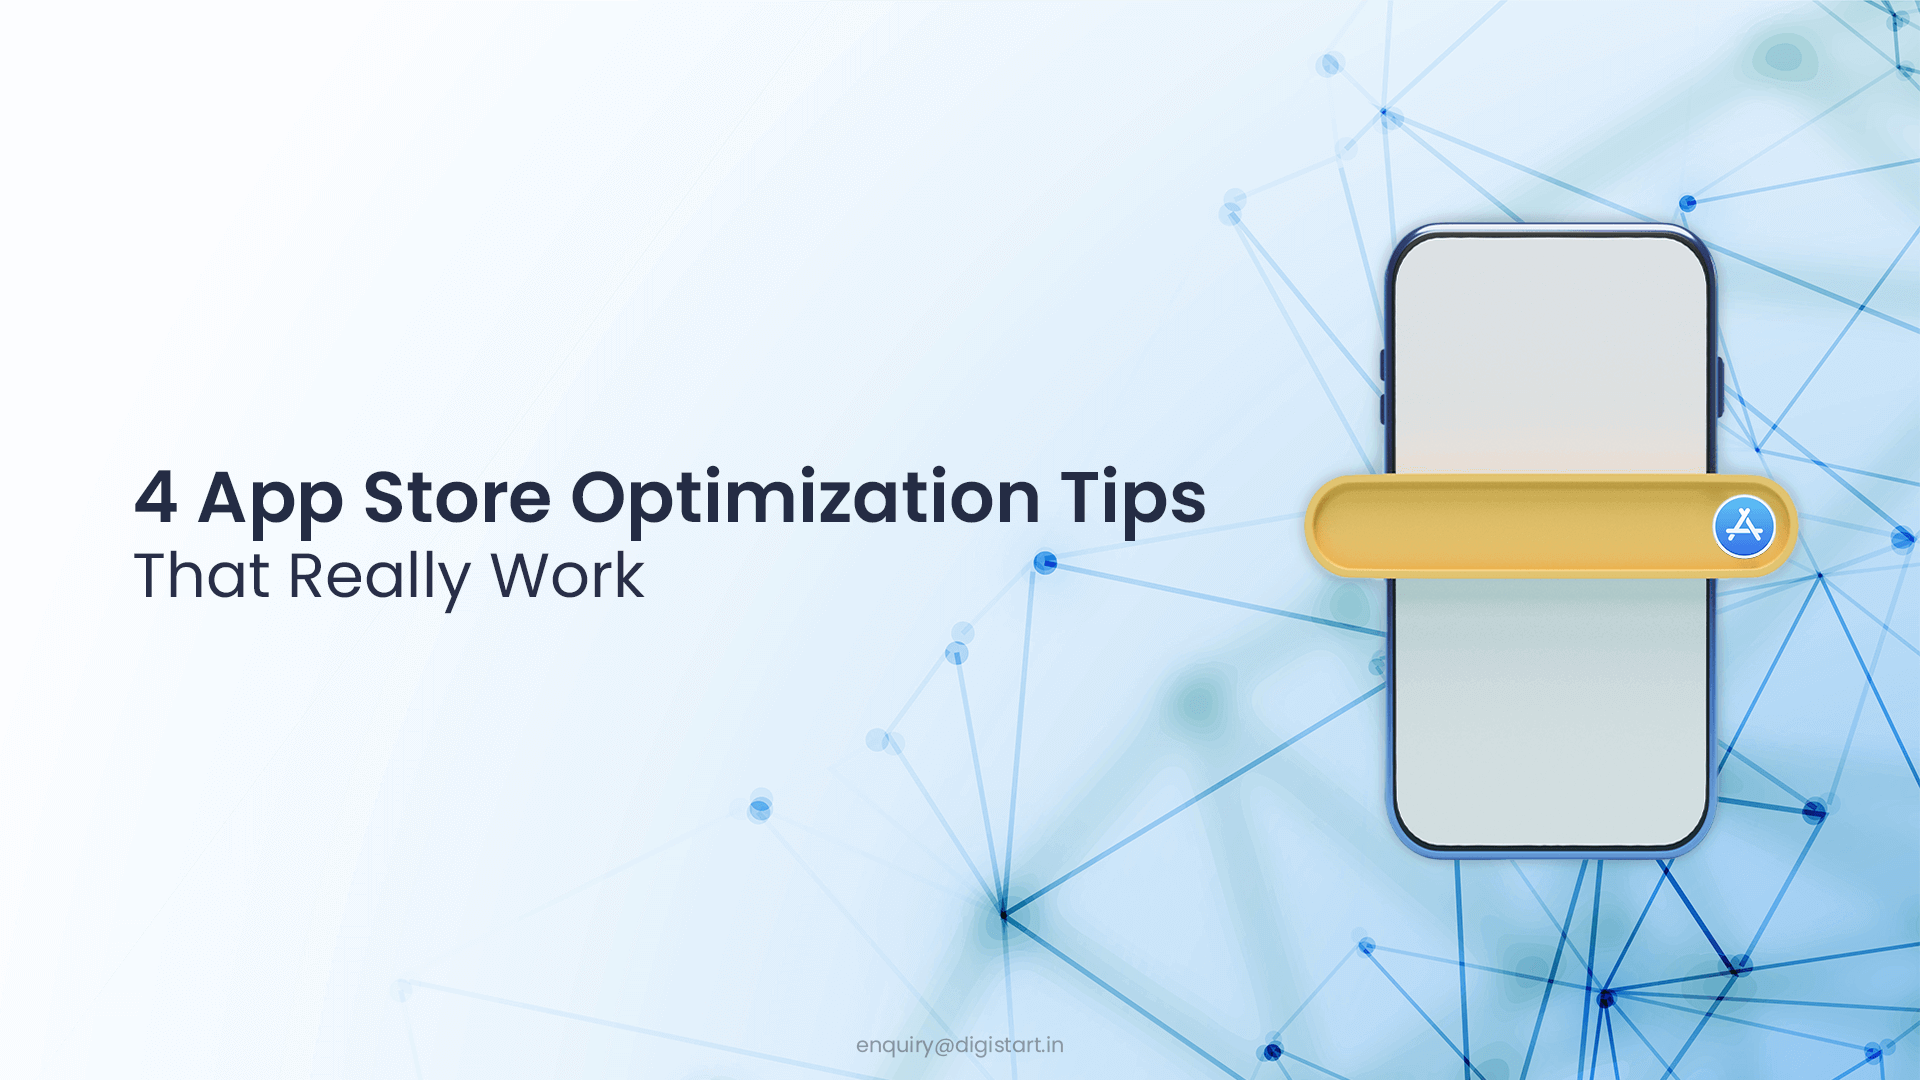 app-store-optimization